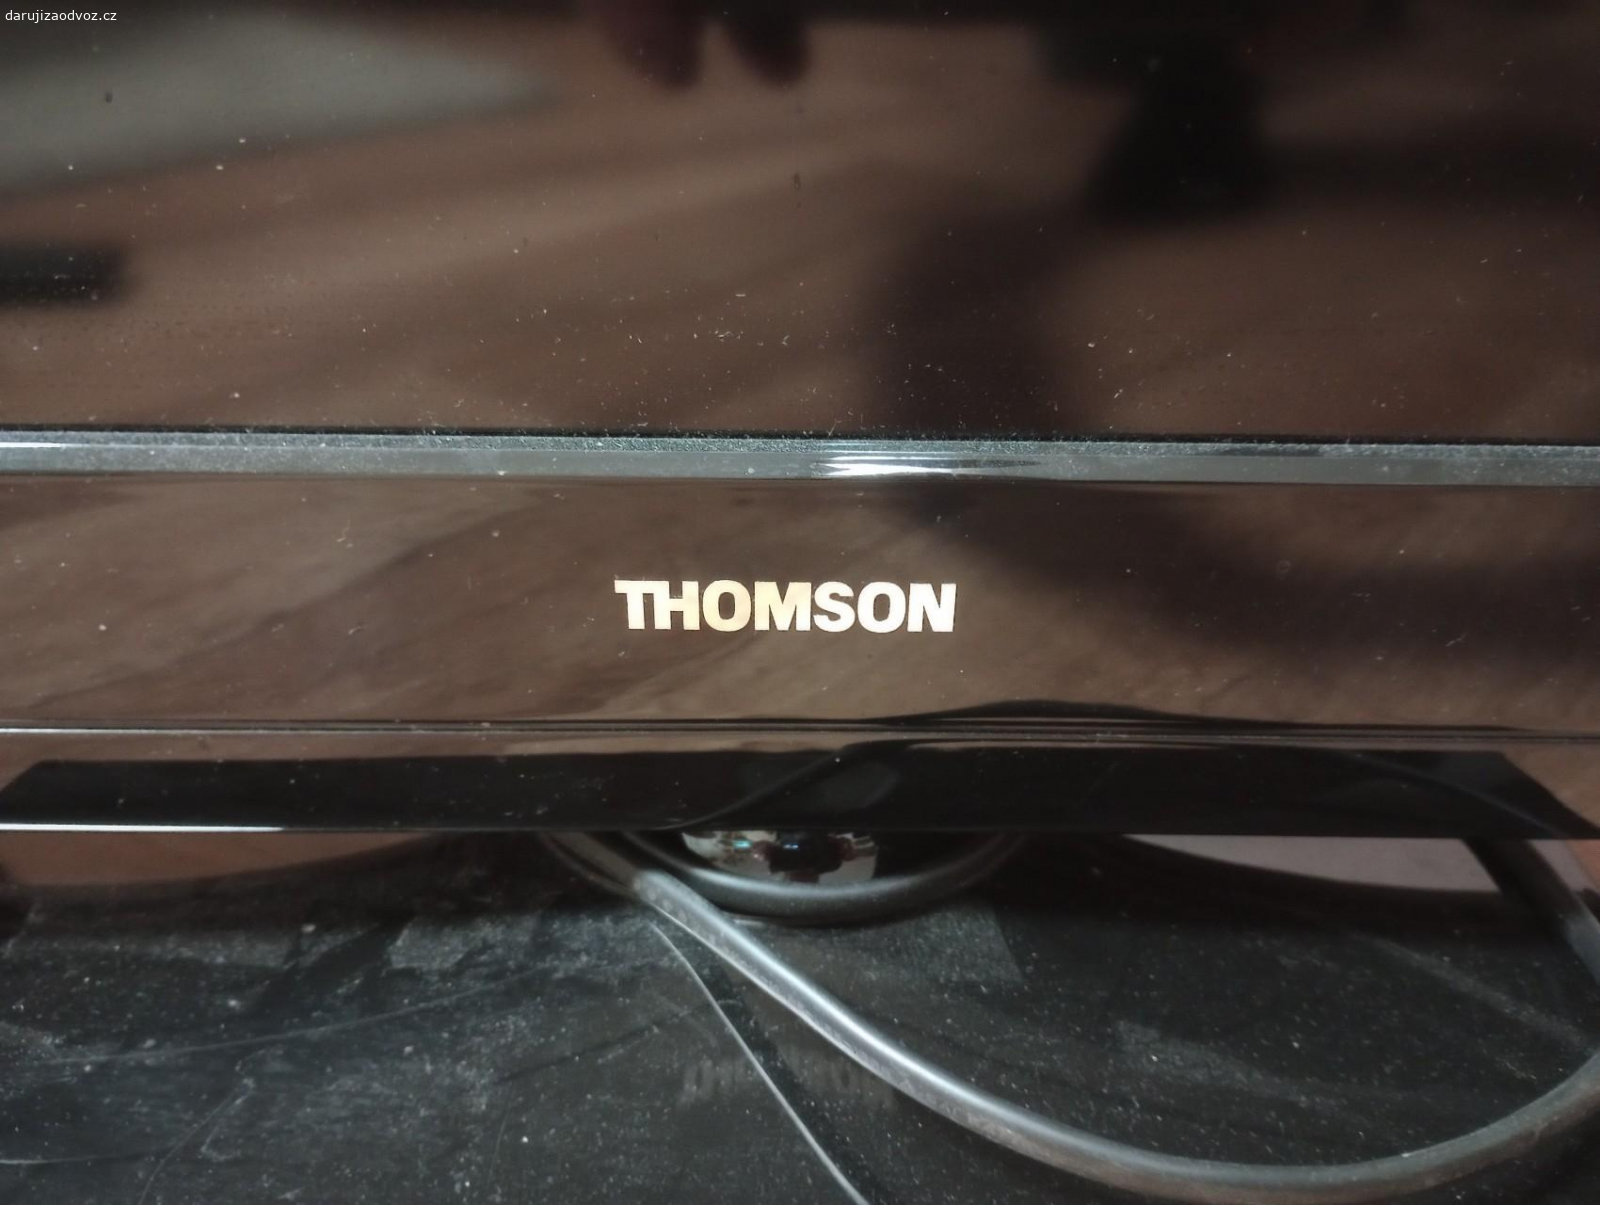 TV Thomson 26